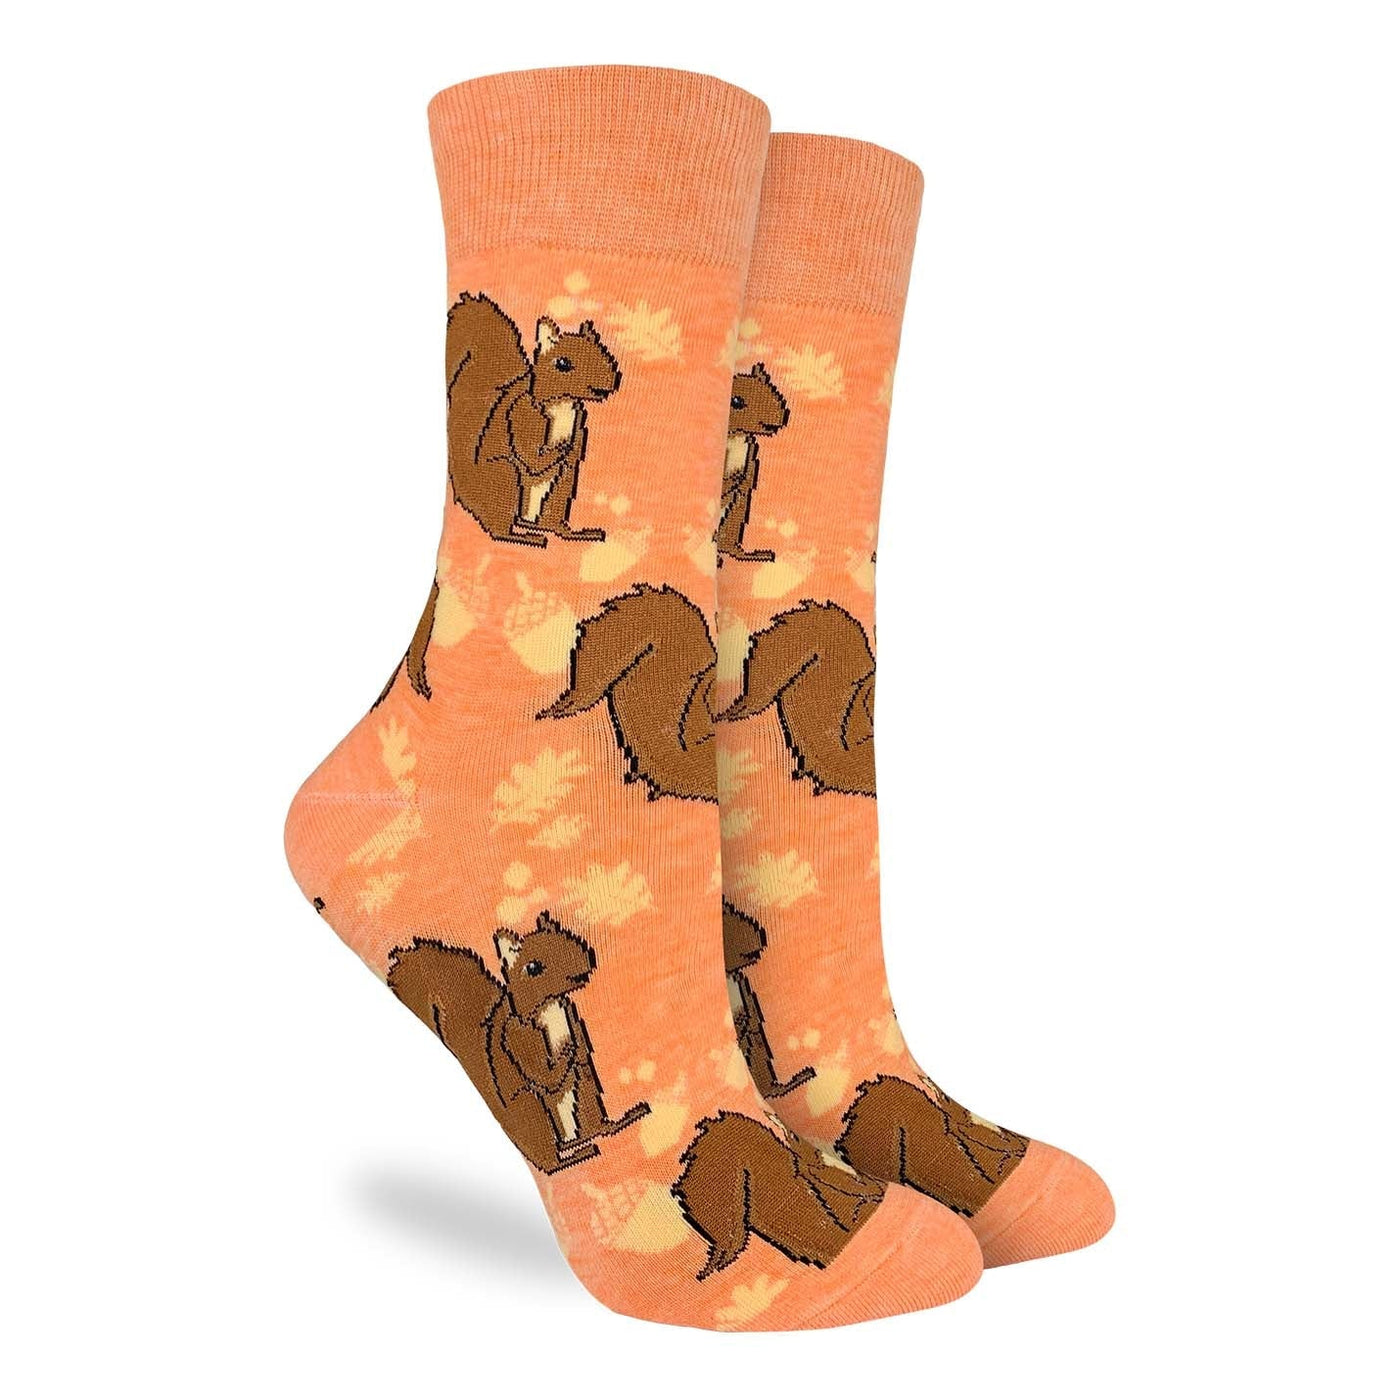 "Orange Squirrel" Crew Socks by Good Luck Sock